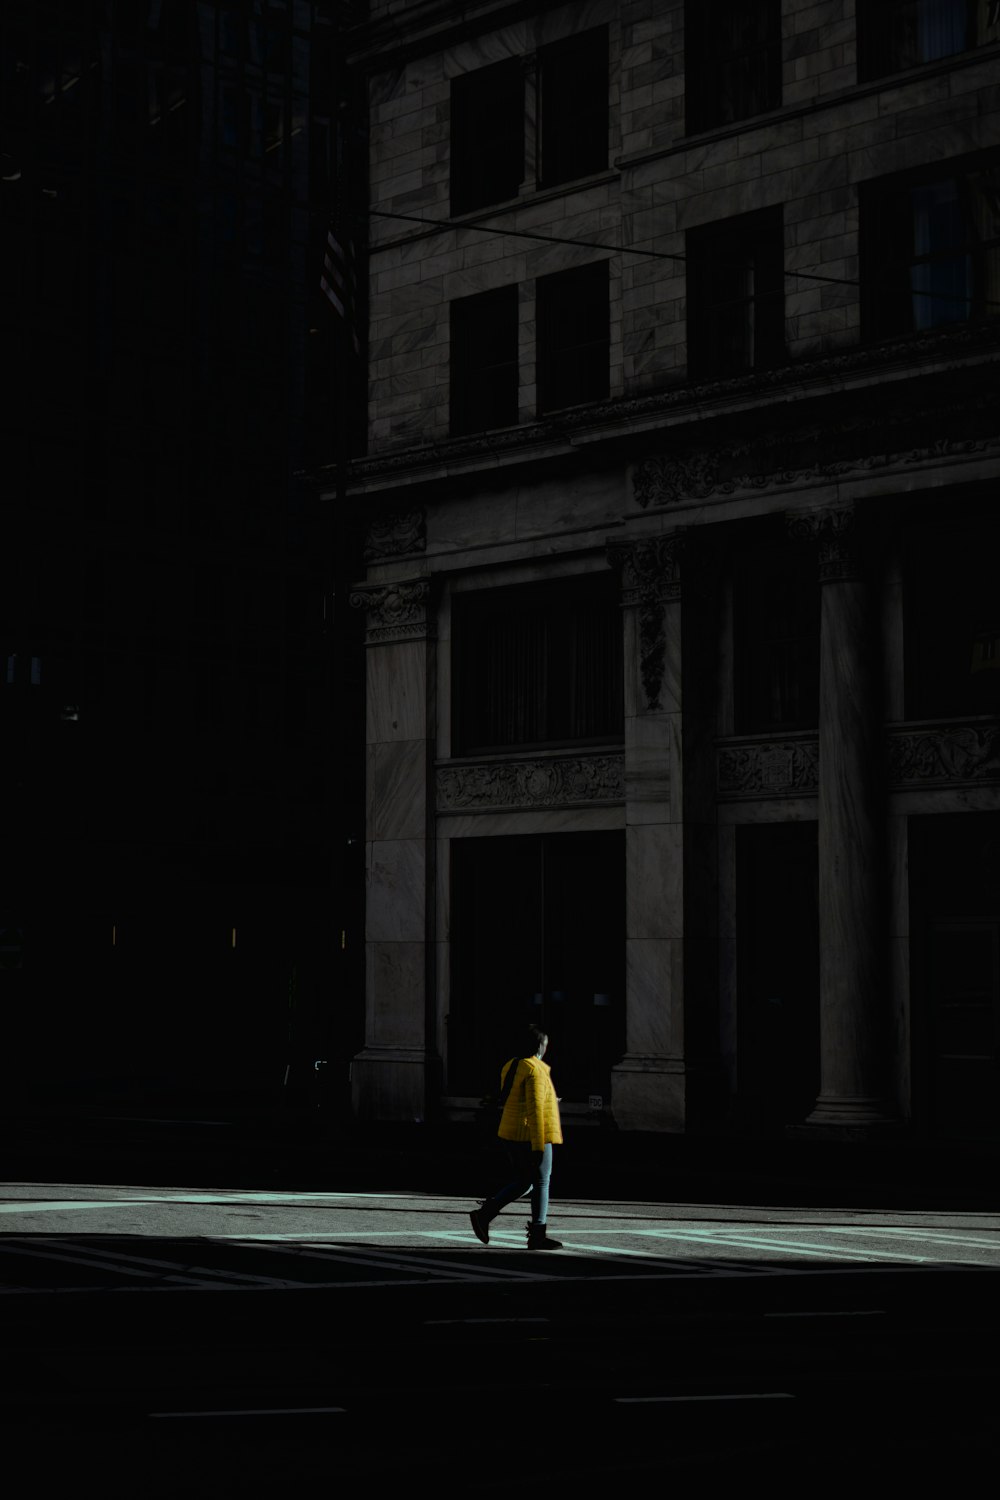 woman in yellow dress walking on street during nighttime